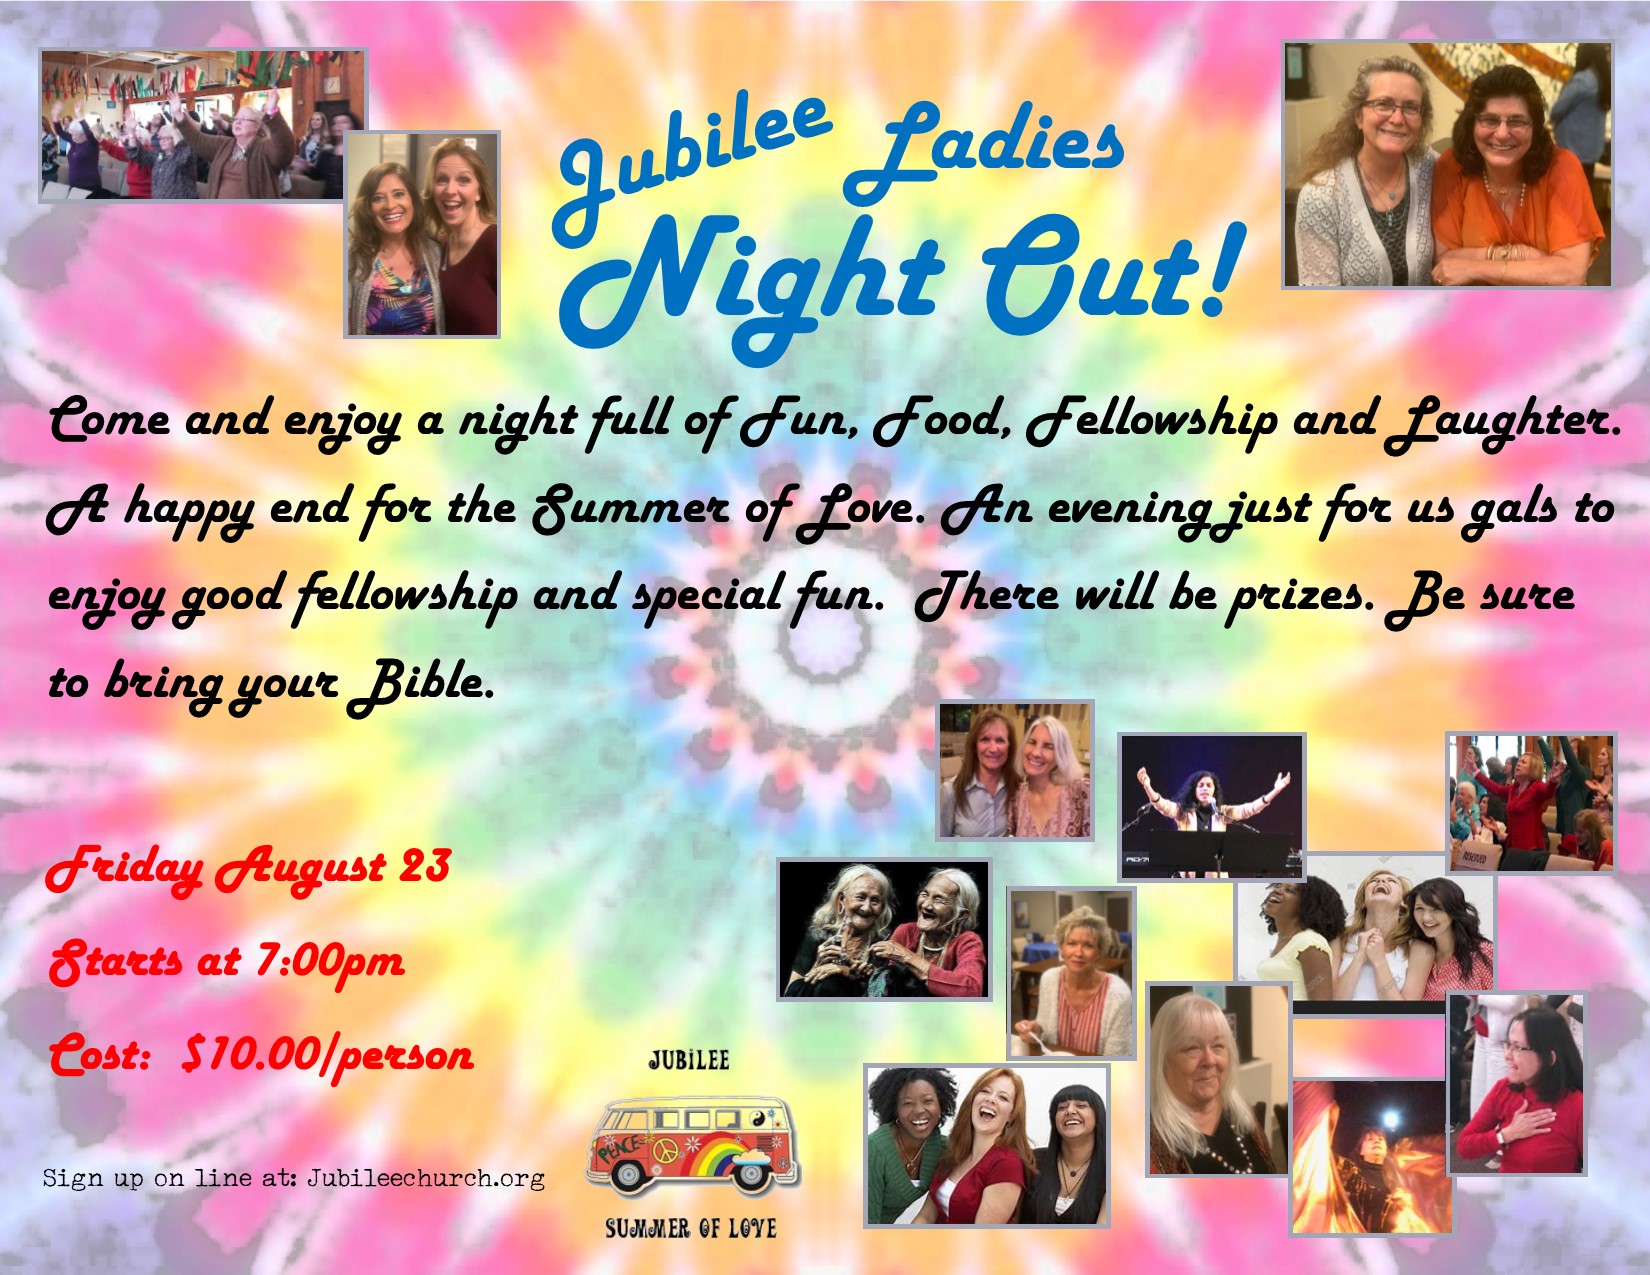 Jubilee Ladies Night Out !